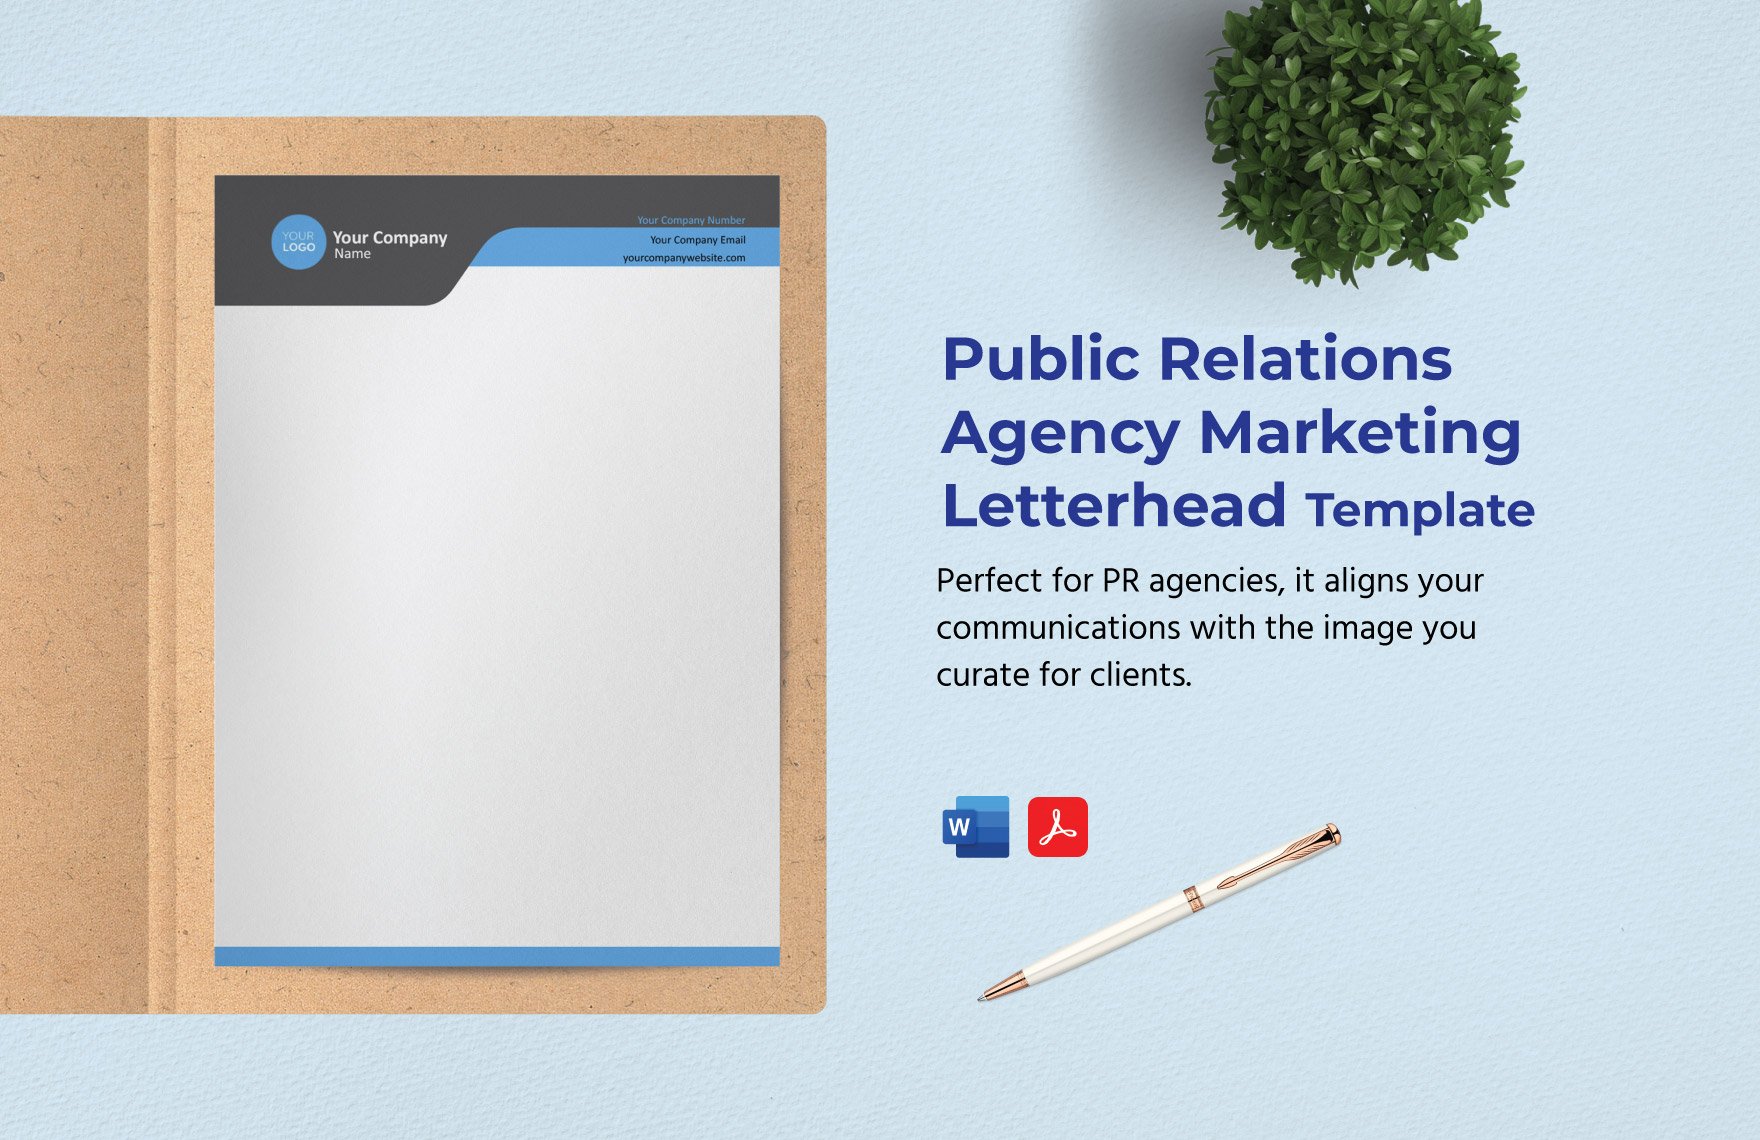 Public Relations Agency Marketing Letterhead Template